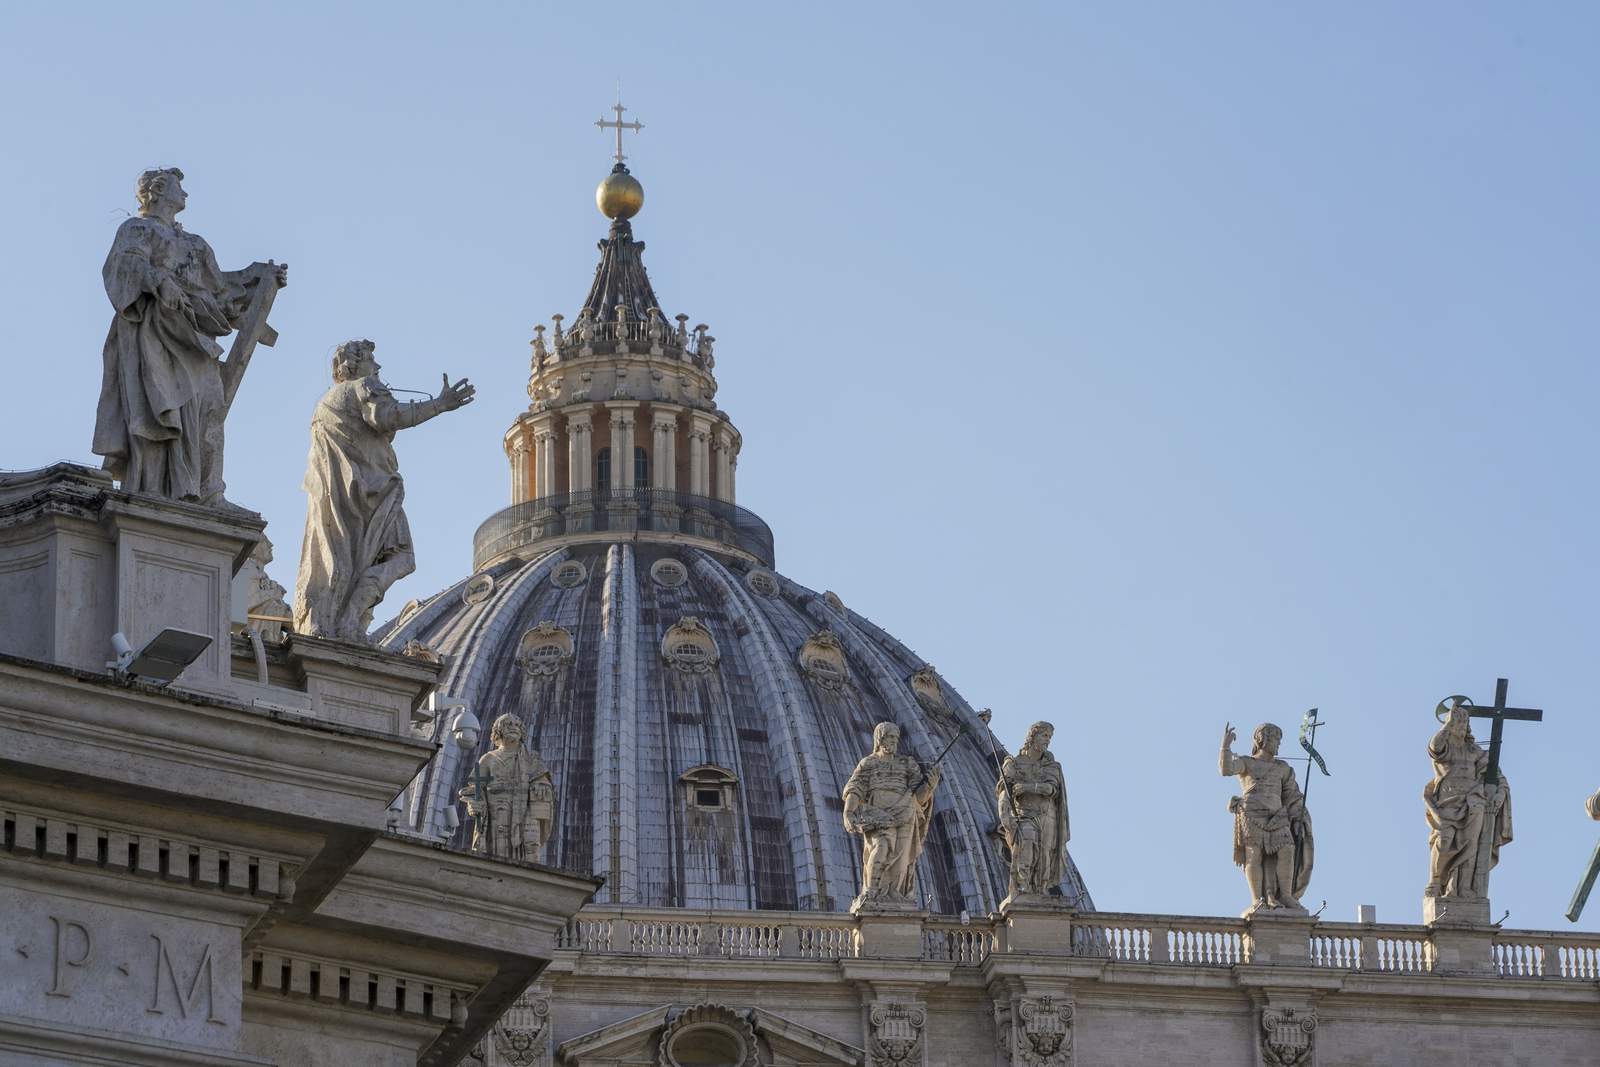 Alleging sex abuse, 4 sue Vatican over handling of McCarrick